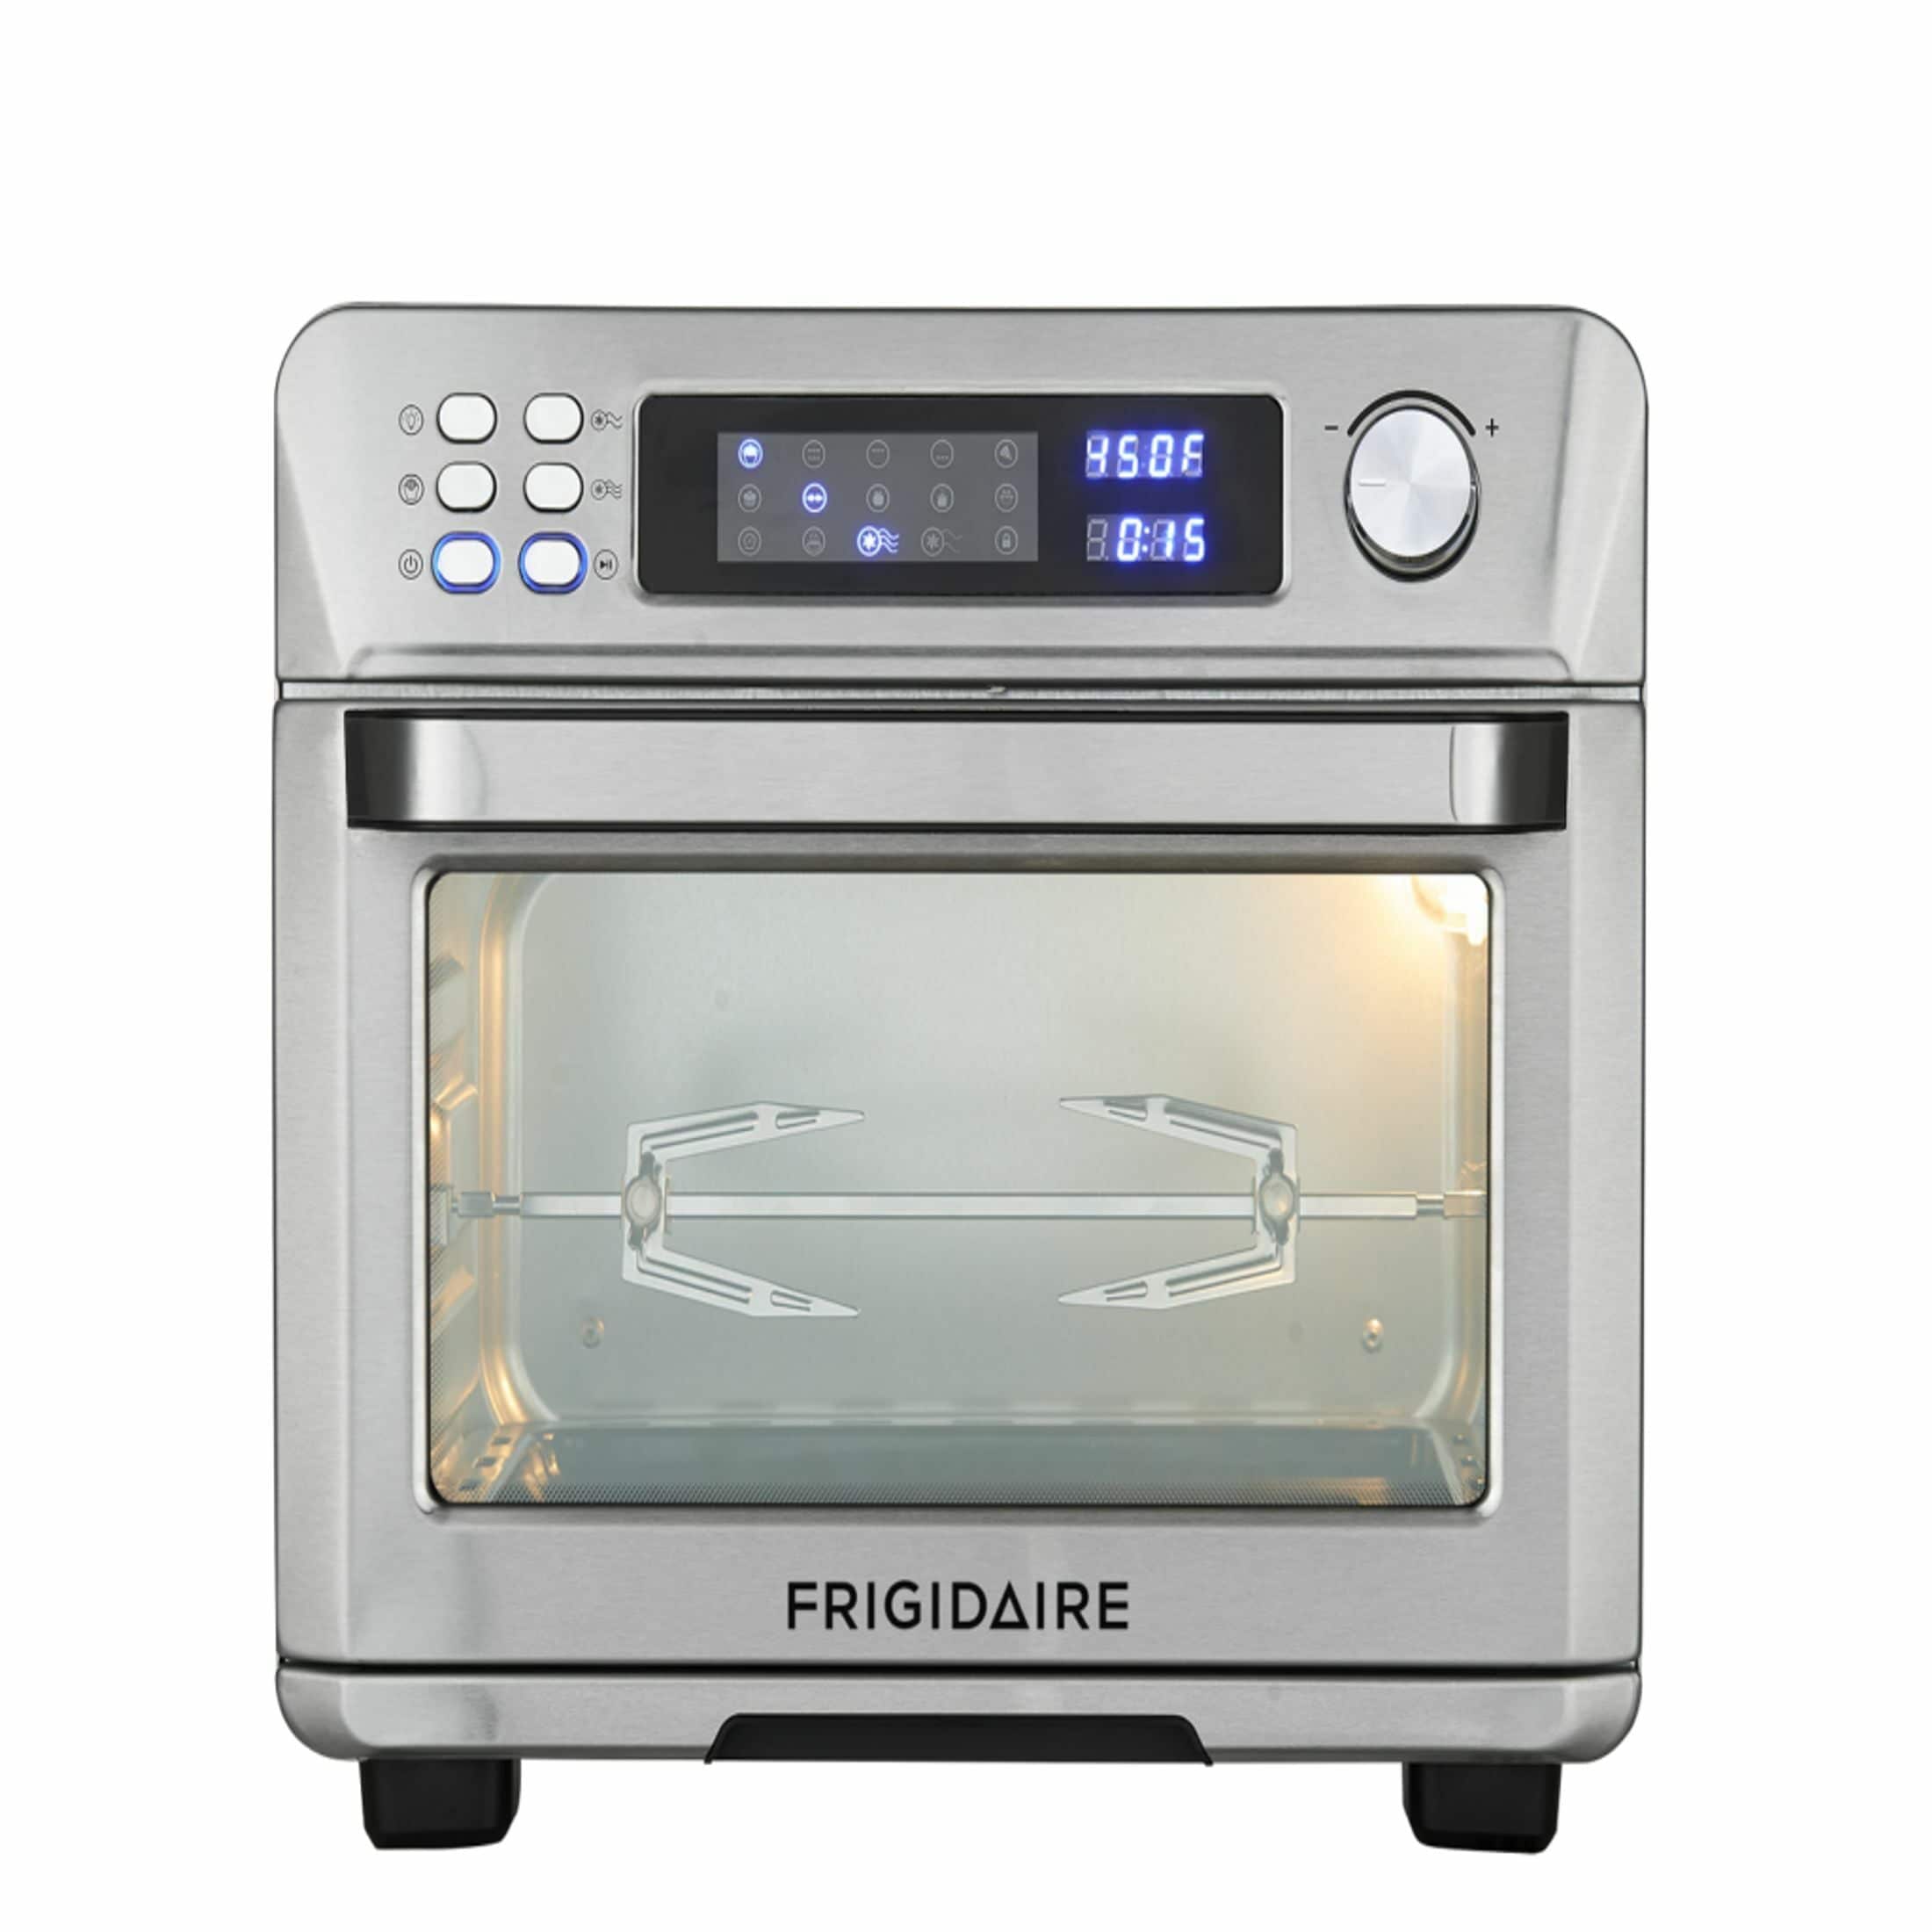 Farberware Air Fryer Toaster Oven, Stainless Steel, Countertop